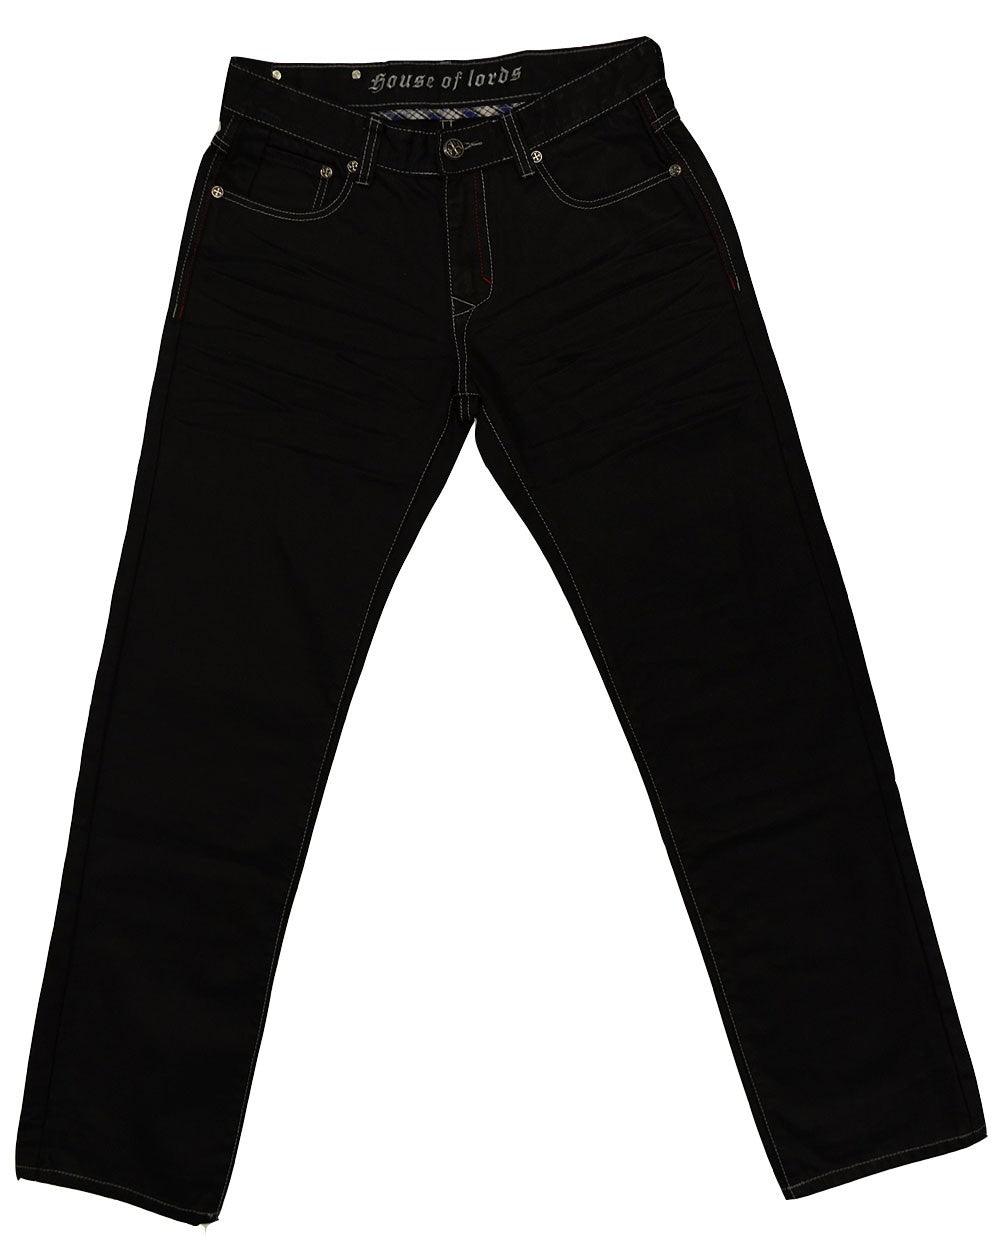 House of Lords Black Denim Jeans - Flyclothing LLC